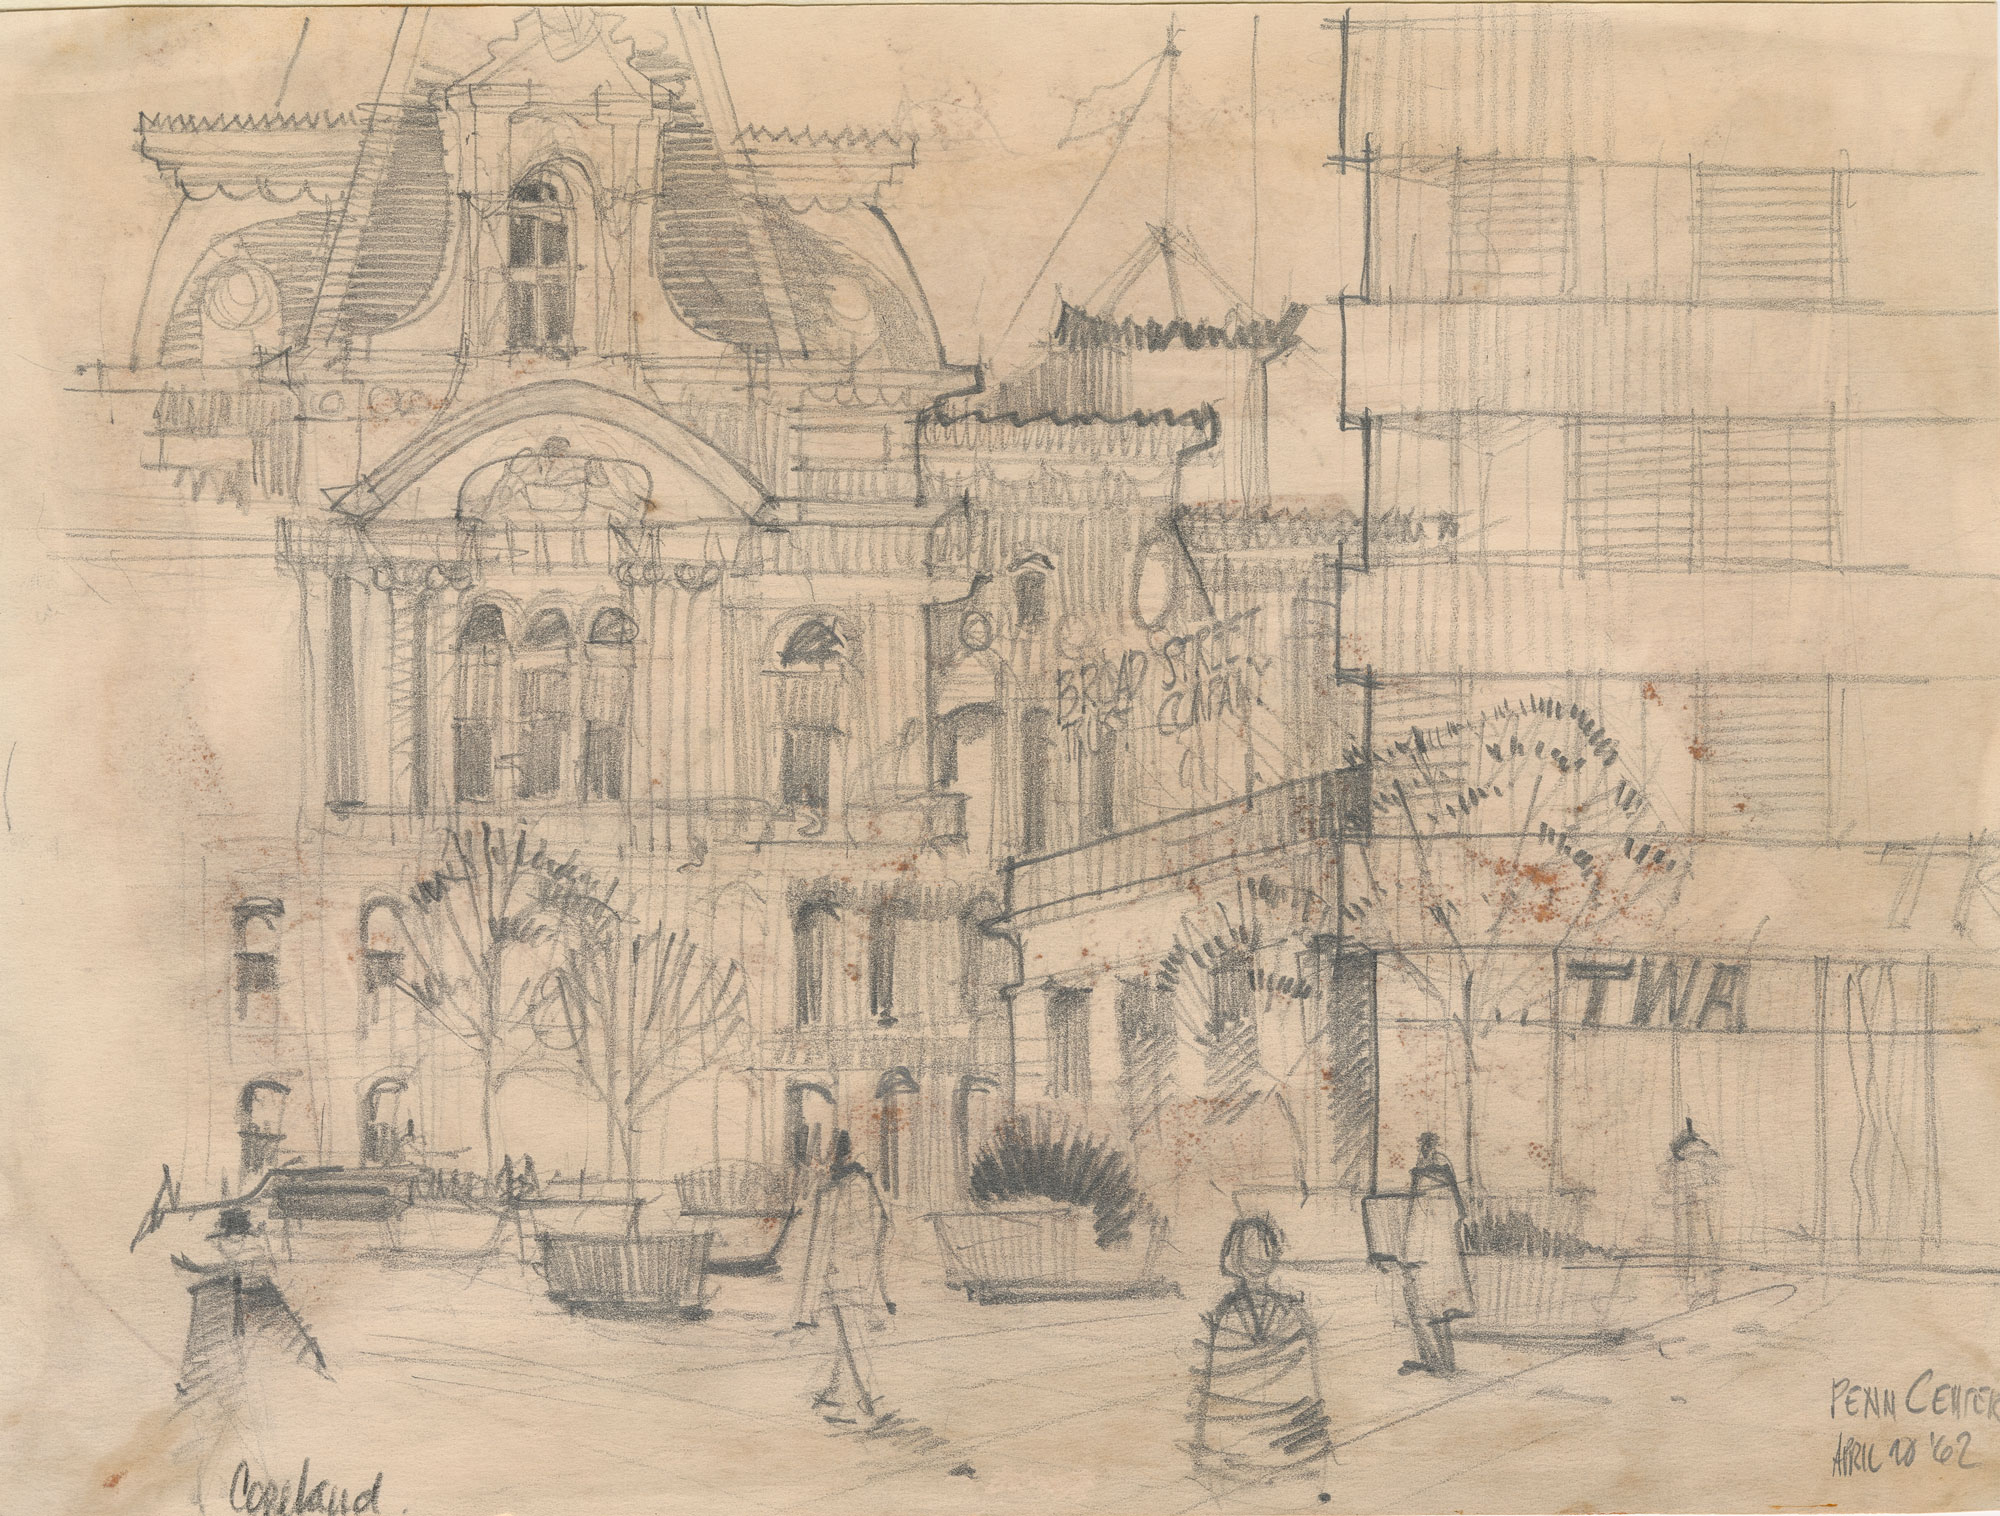 Elevation sketch of historic University of Pennsylvania building